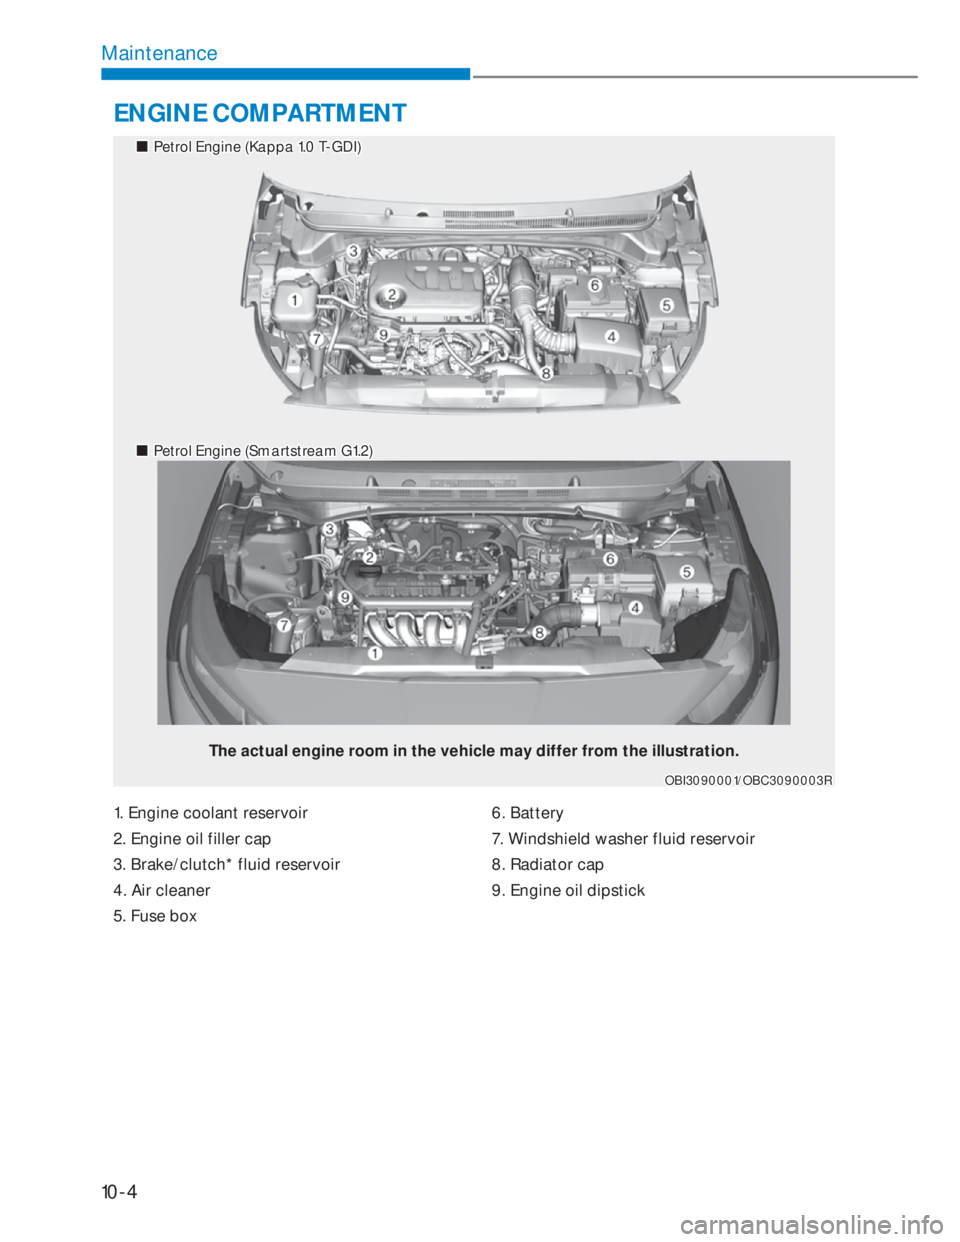 HYUNDAI I20 2022  Owners Manual 10-4
Maintenance
1. Engine coolant reservoir
2. Engine oil filler cap 
3. Brake/clutch* fluid reservoir 
4. Air cleaner 
5. Fuse box 6. Battery 
7. Windshield washer fluid reservoir 
8. Radiator cap
9